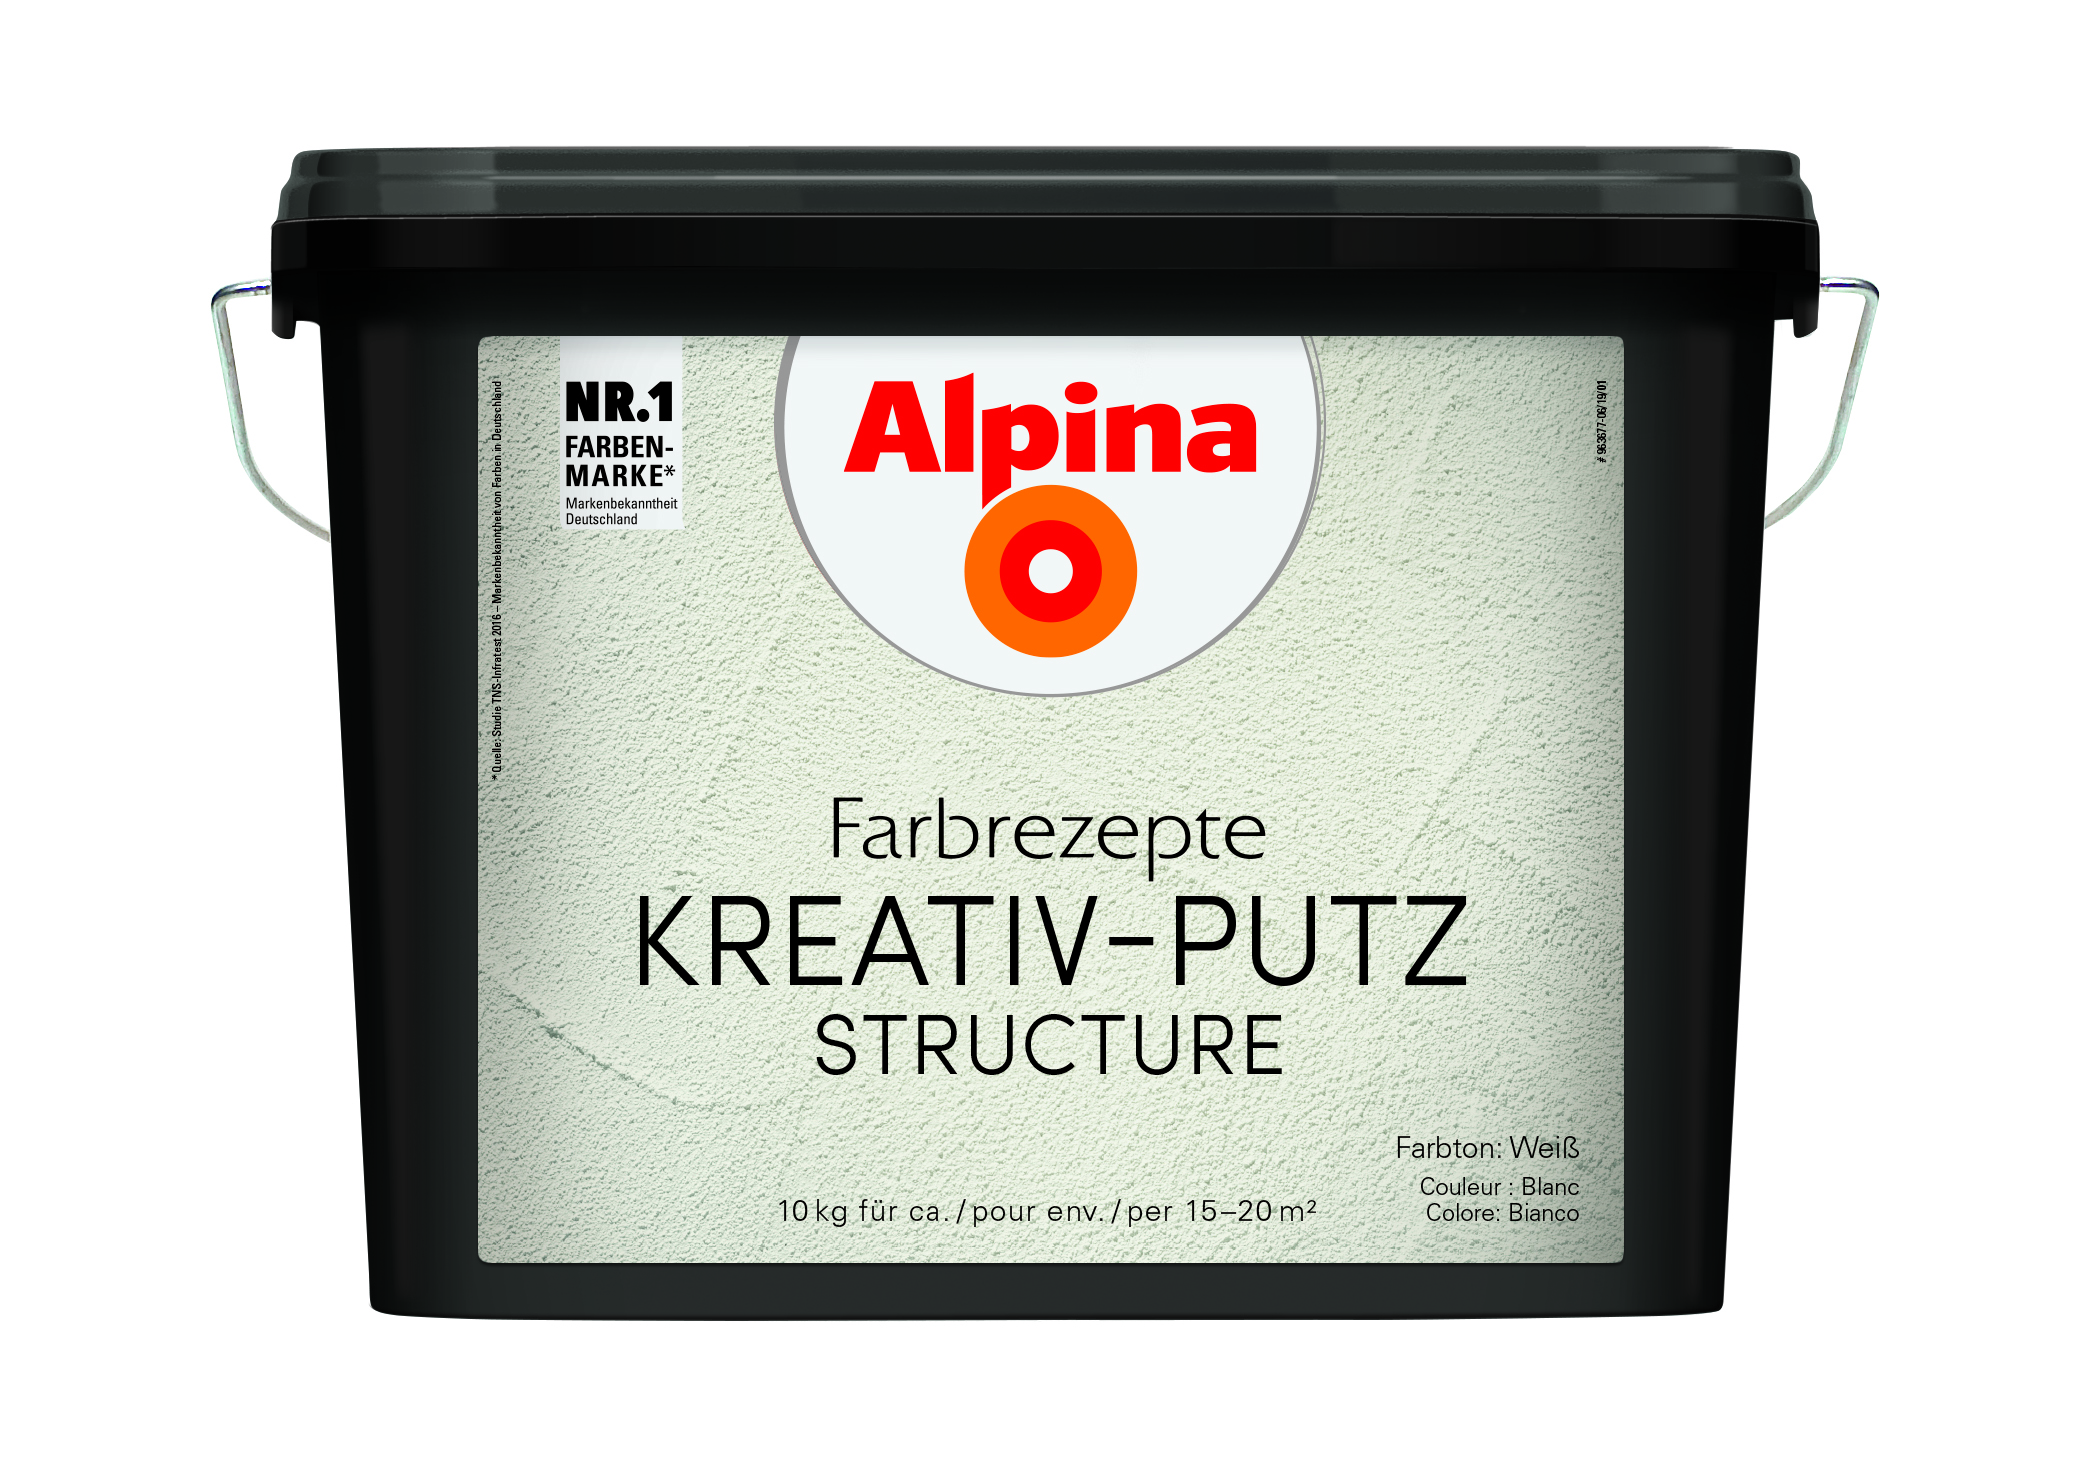 Alpina Kreativ-Putz Structure